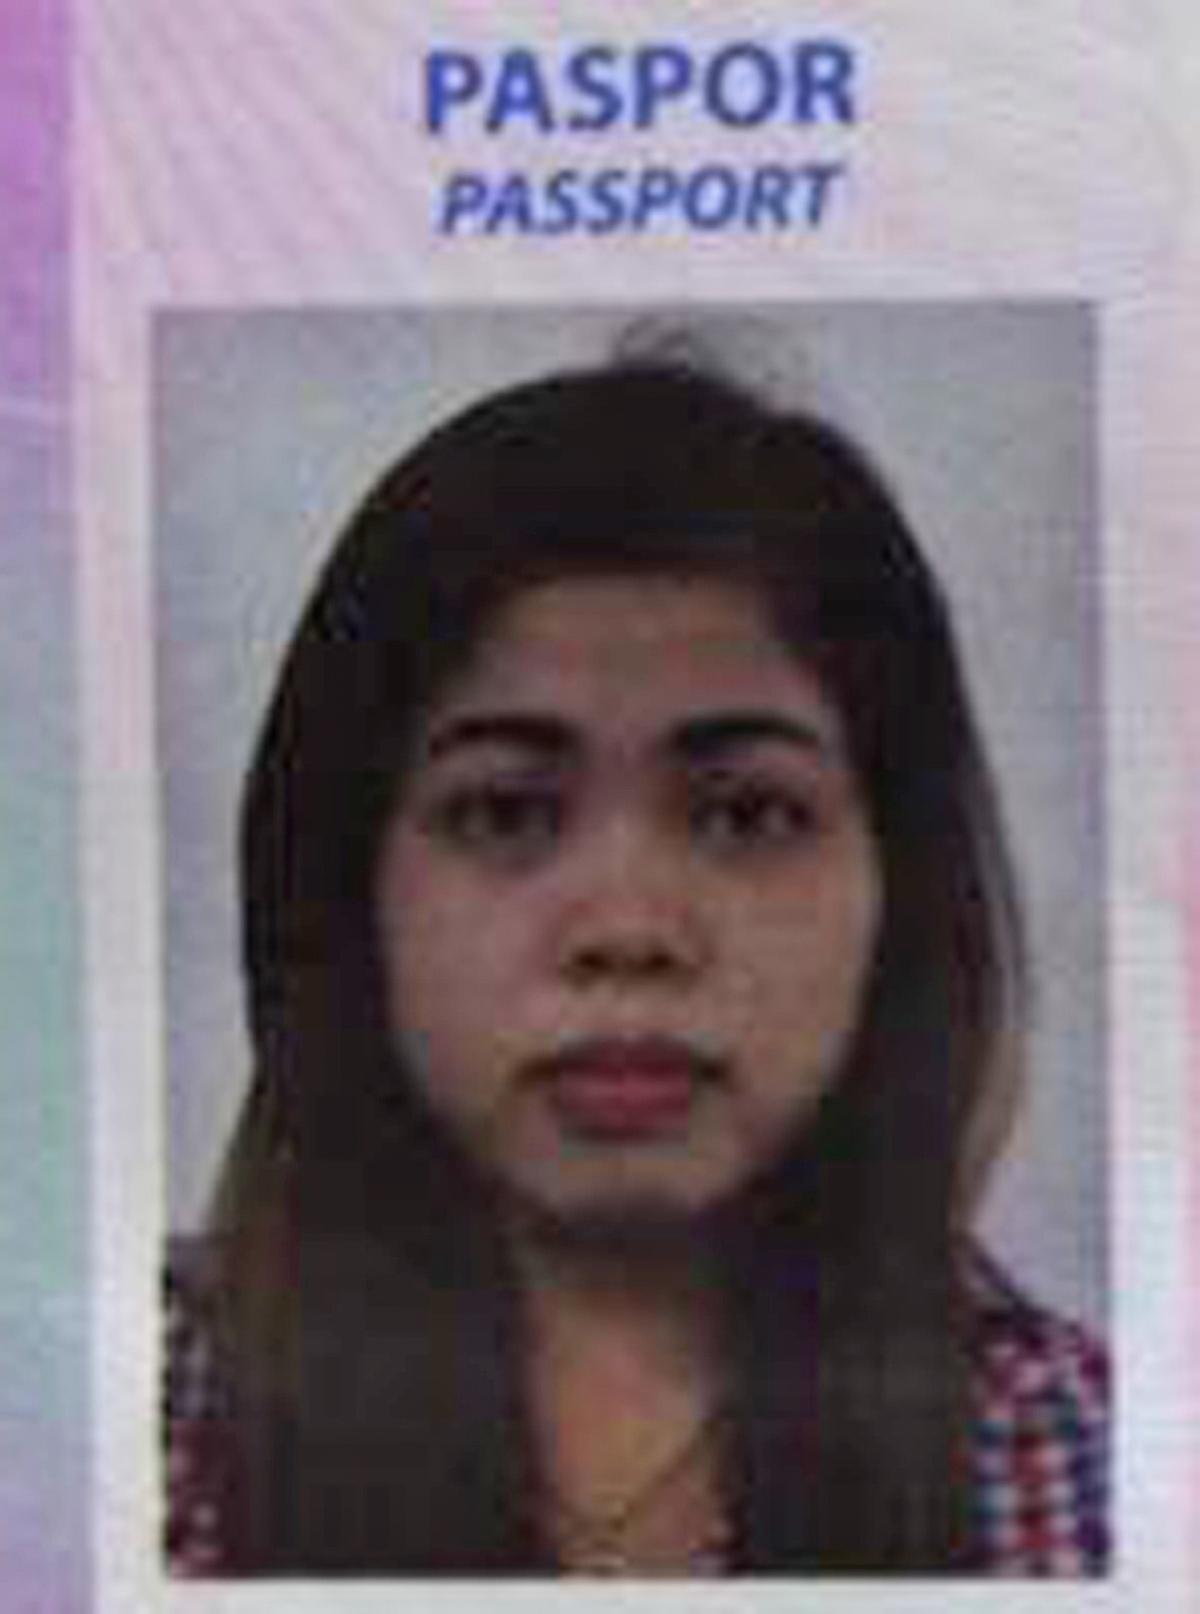 Portrait on the passport of Siti Aisyah. (Kumparan via AP)